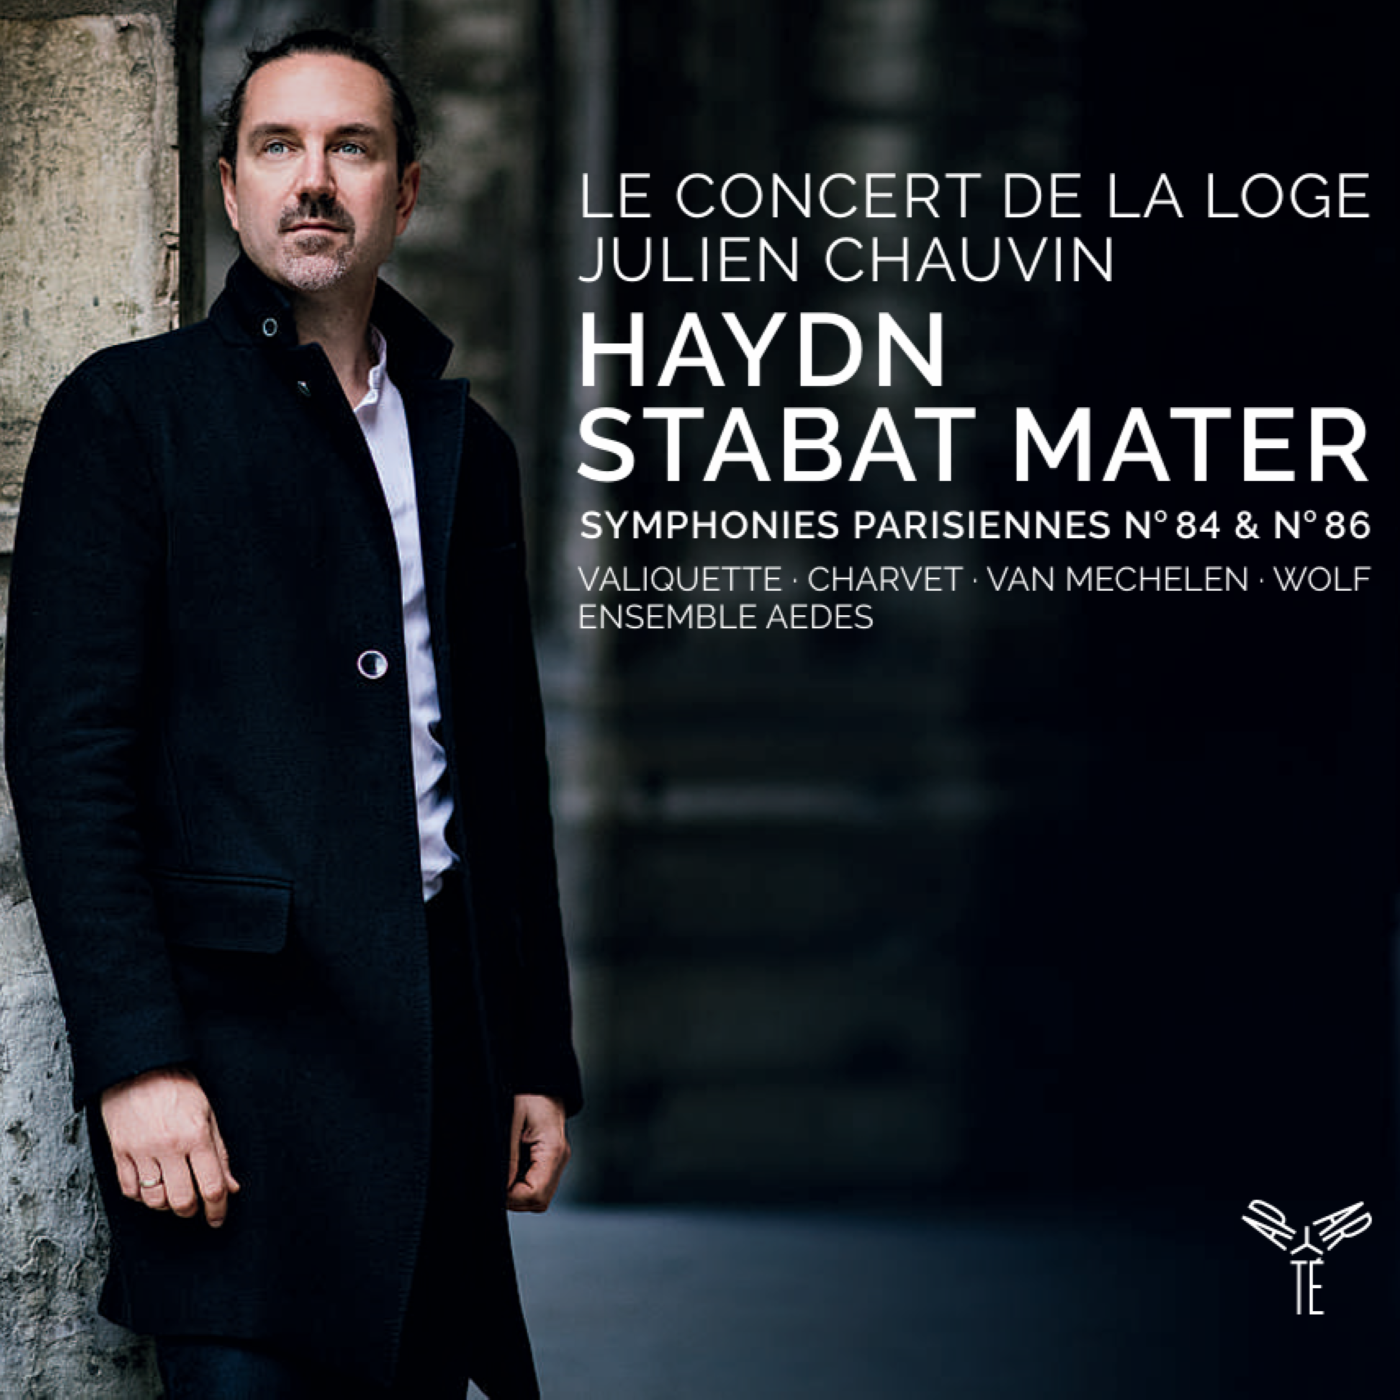 Haydn: Stabat Mater, Symphonies Parisiennes Nos. 84 & 86